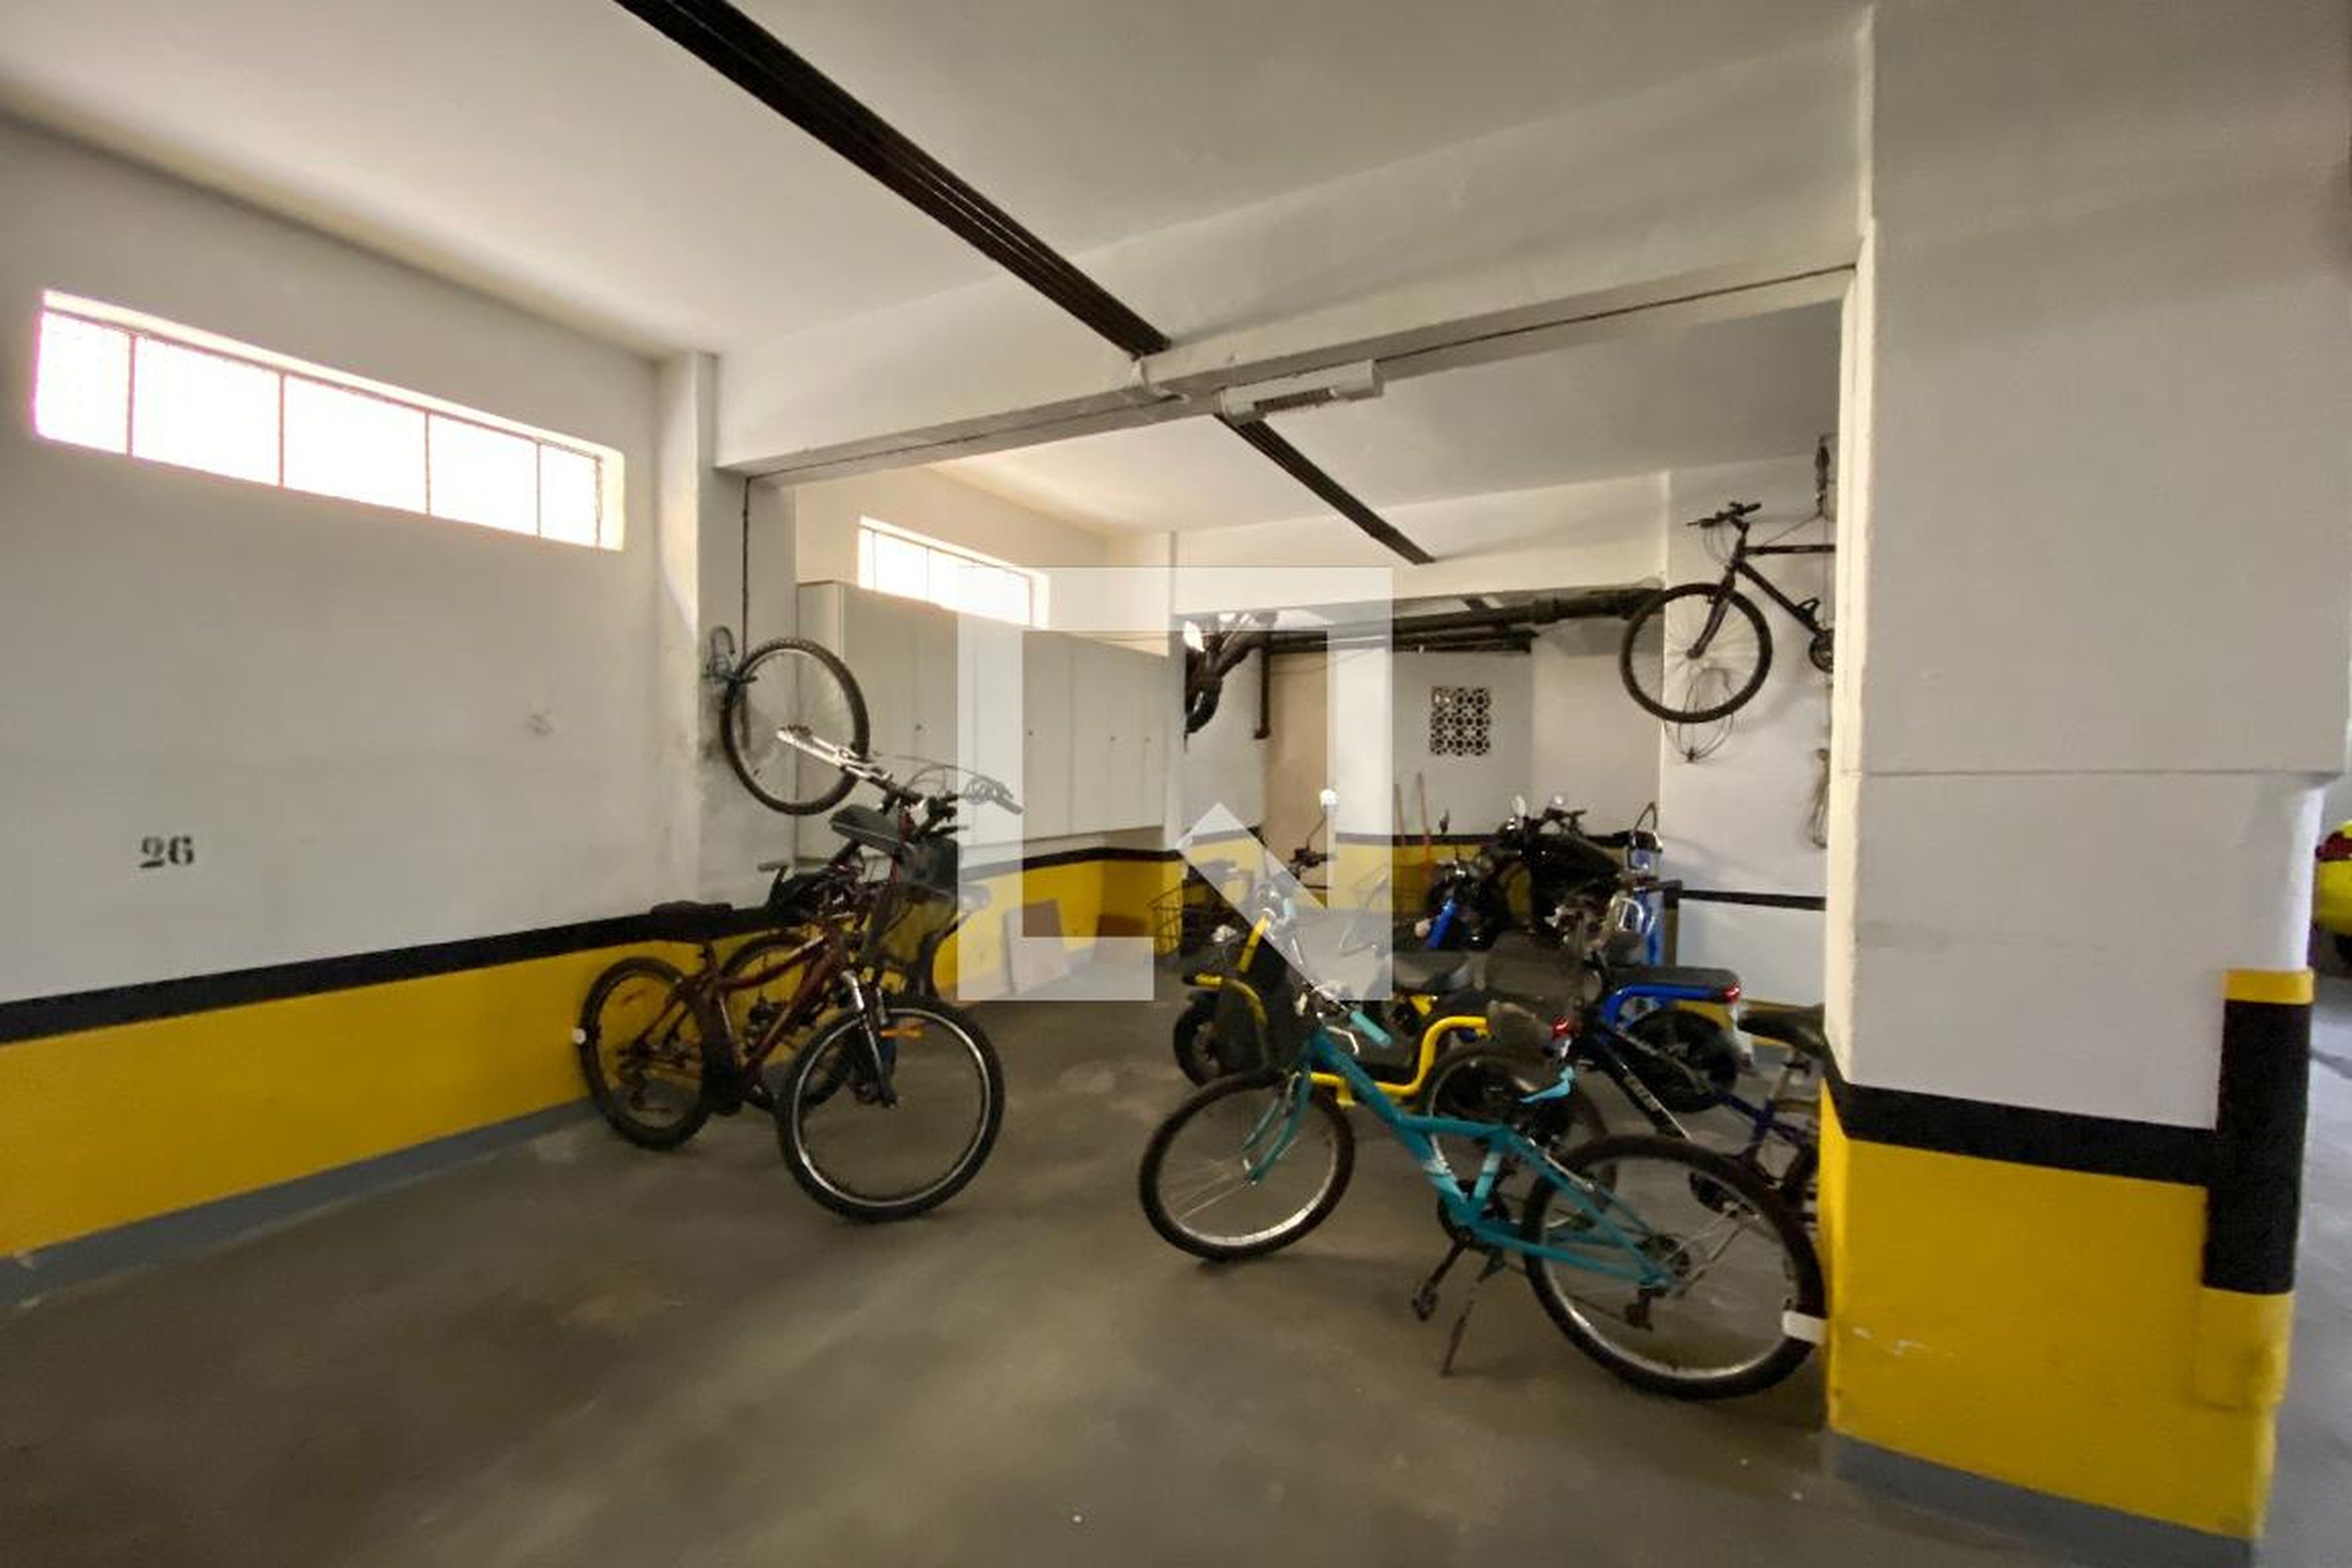 Bicicletario - Edifício das Acácias